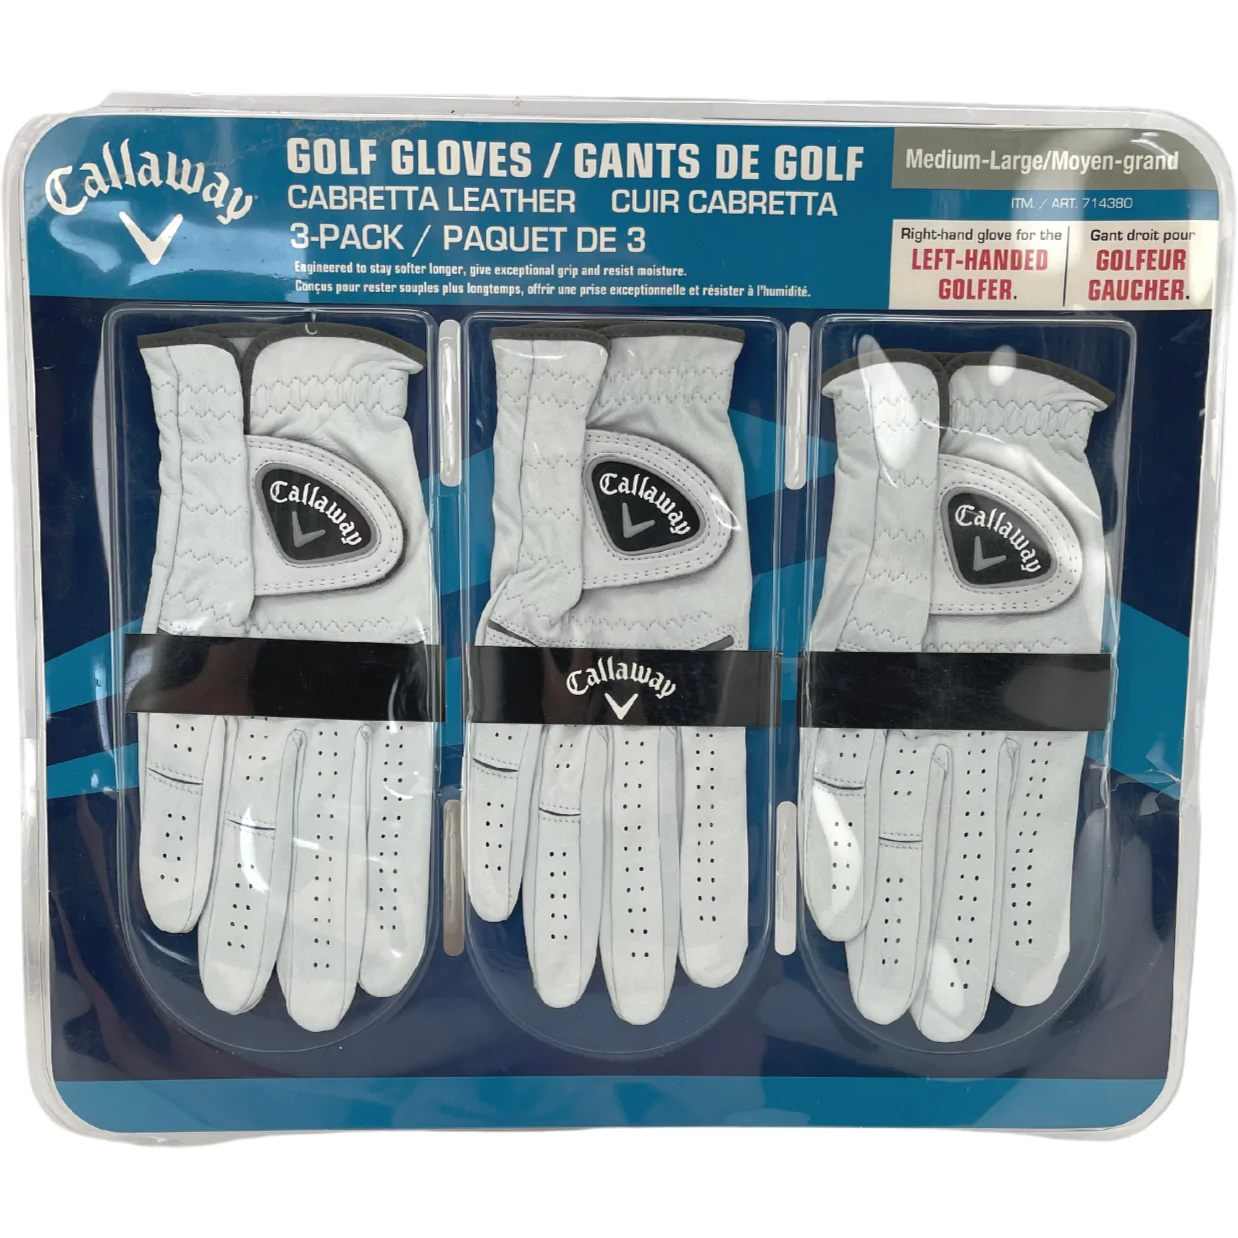 Callaway Men's Right Hand Golf Glove Pack / 3 Pack / White / Size Medium-Large **DEALS**